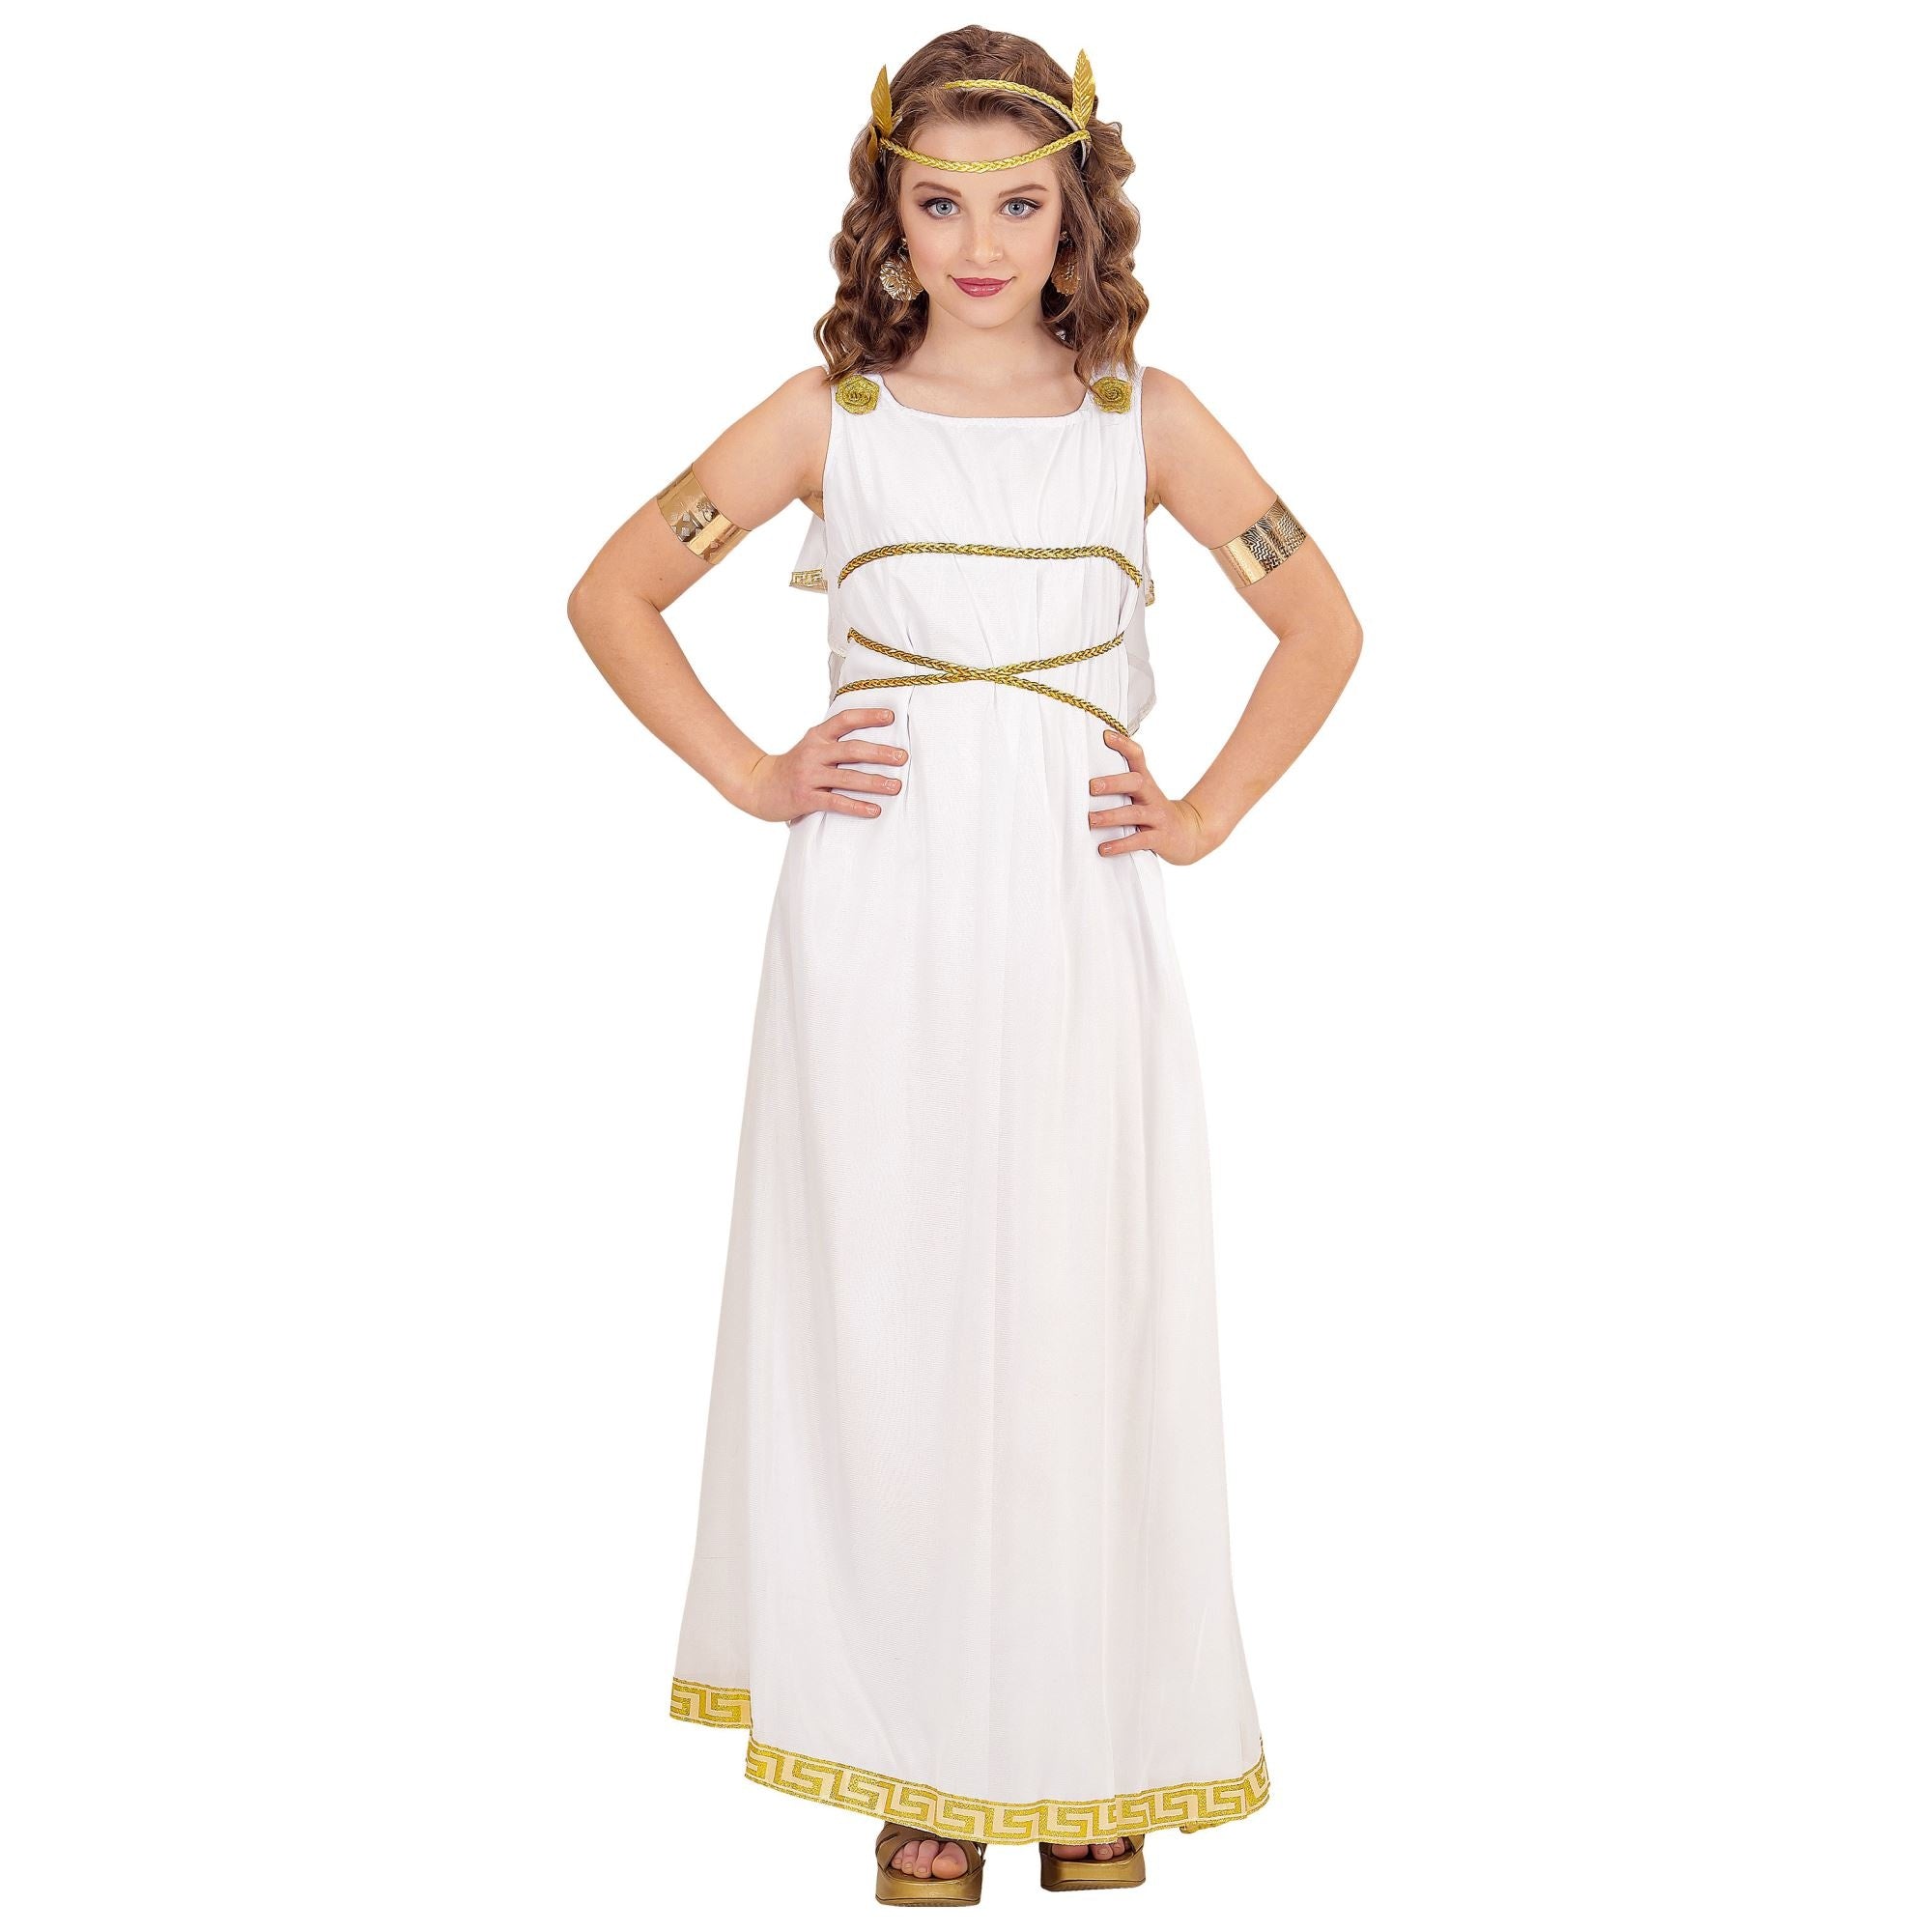 Widmann - Griekse & Romeinse Oudheid Kostuum - Griekse Godin Angelica - Meisje - Wit / Beige - Maat 128 - Carnavalskleding - Verkleedkleding